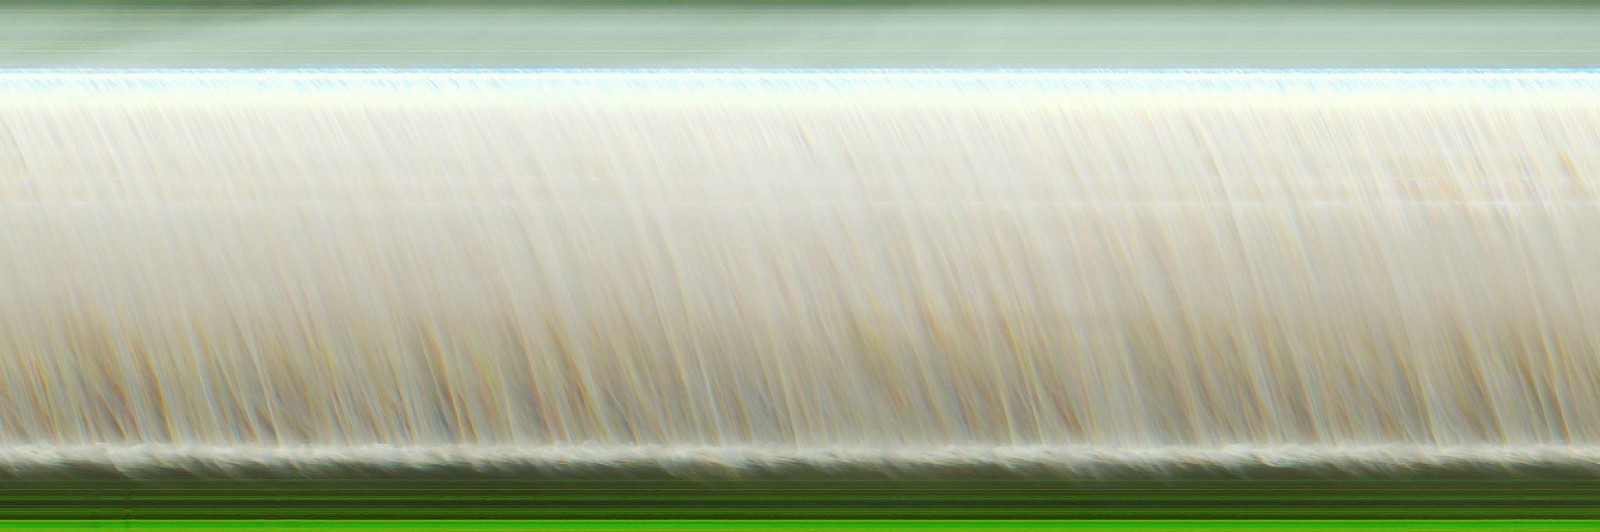 Jay Mark Johnson, AKAKA KASKATA #3, 2010 Akaka Falls HI
archival pigment on paper, mounted on aluminum, 40 x 120 in. (101.6 x 304.8 cm)